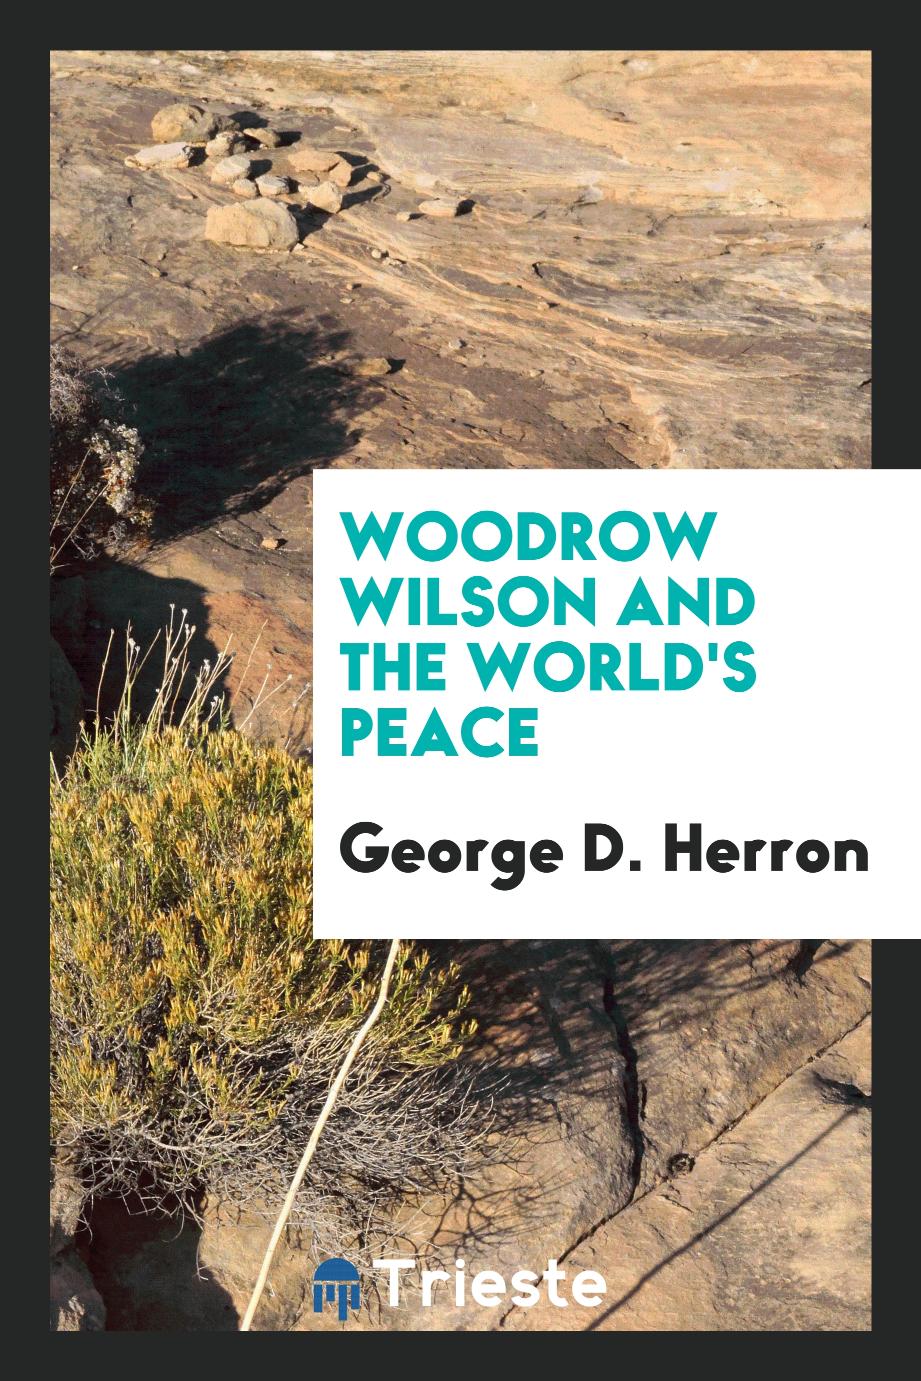 Woodrow Wilson and the world's peace